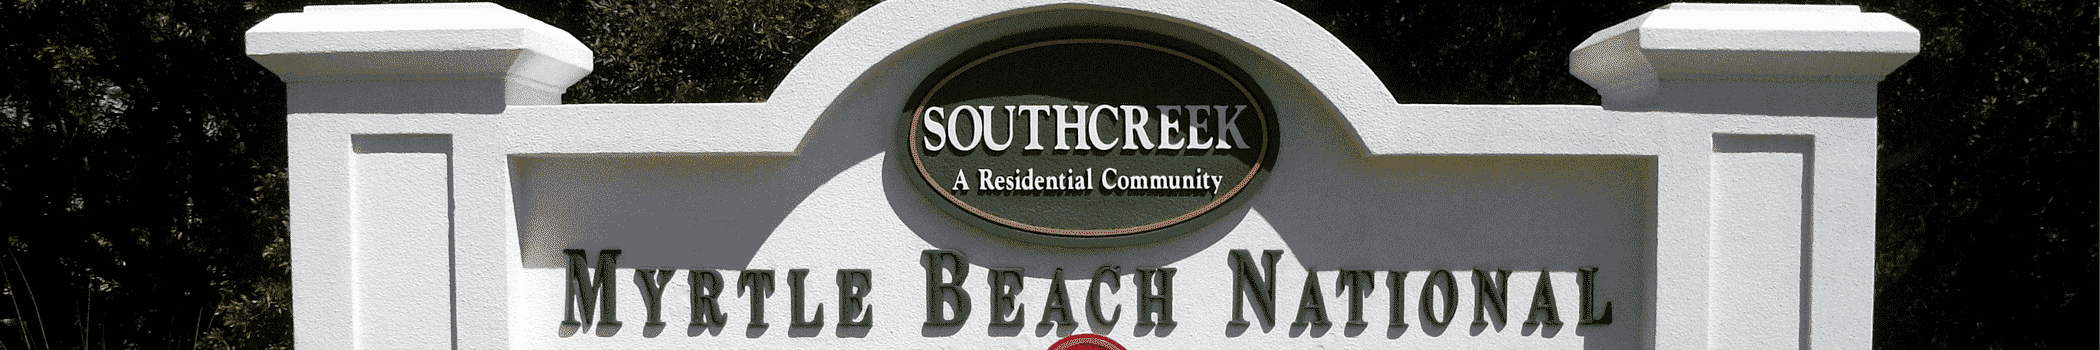 Southcreek Homes in Myrtle Beach | Myrtle Beach National